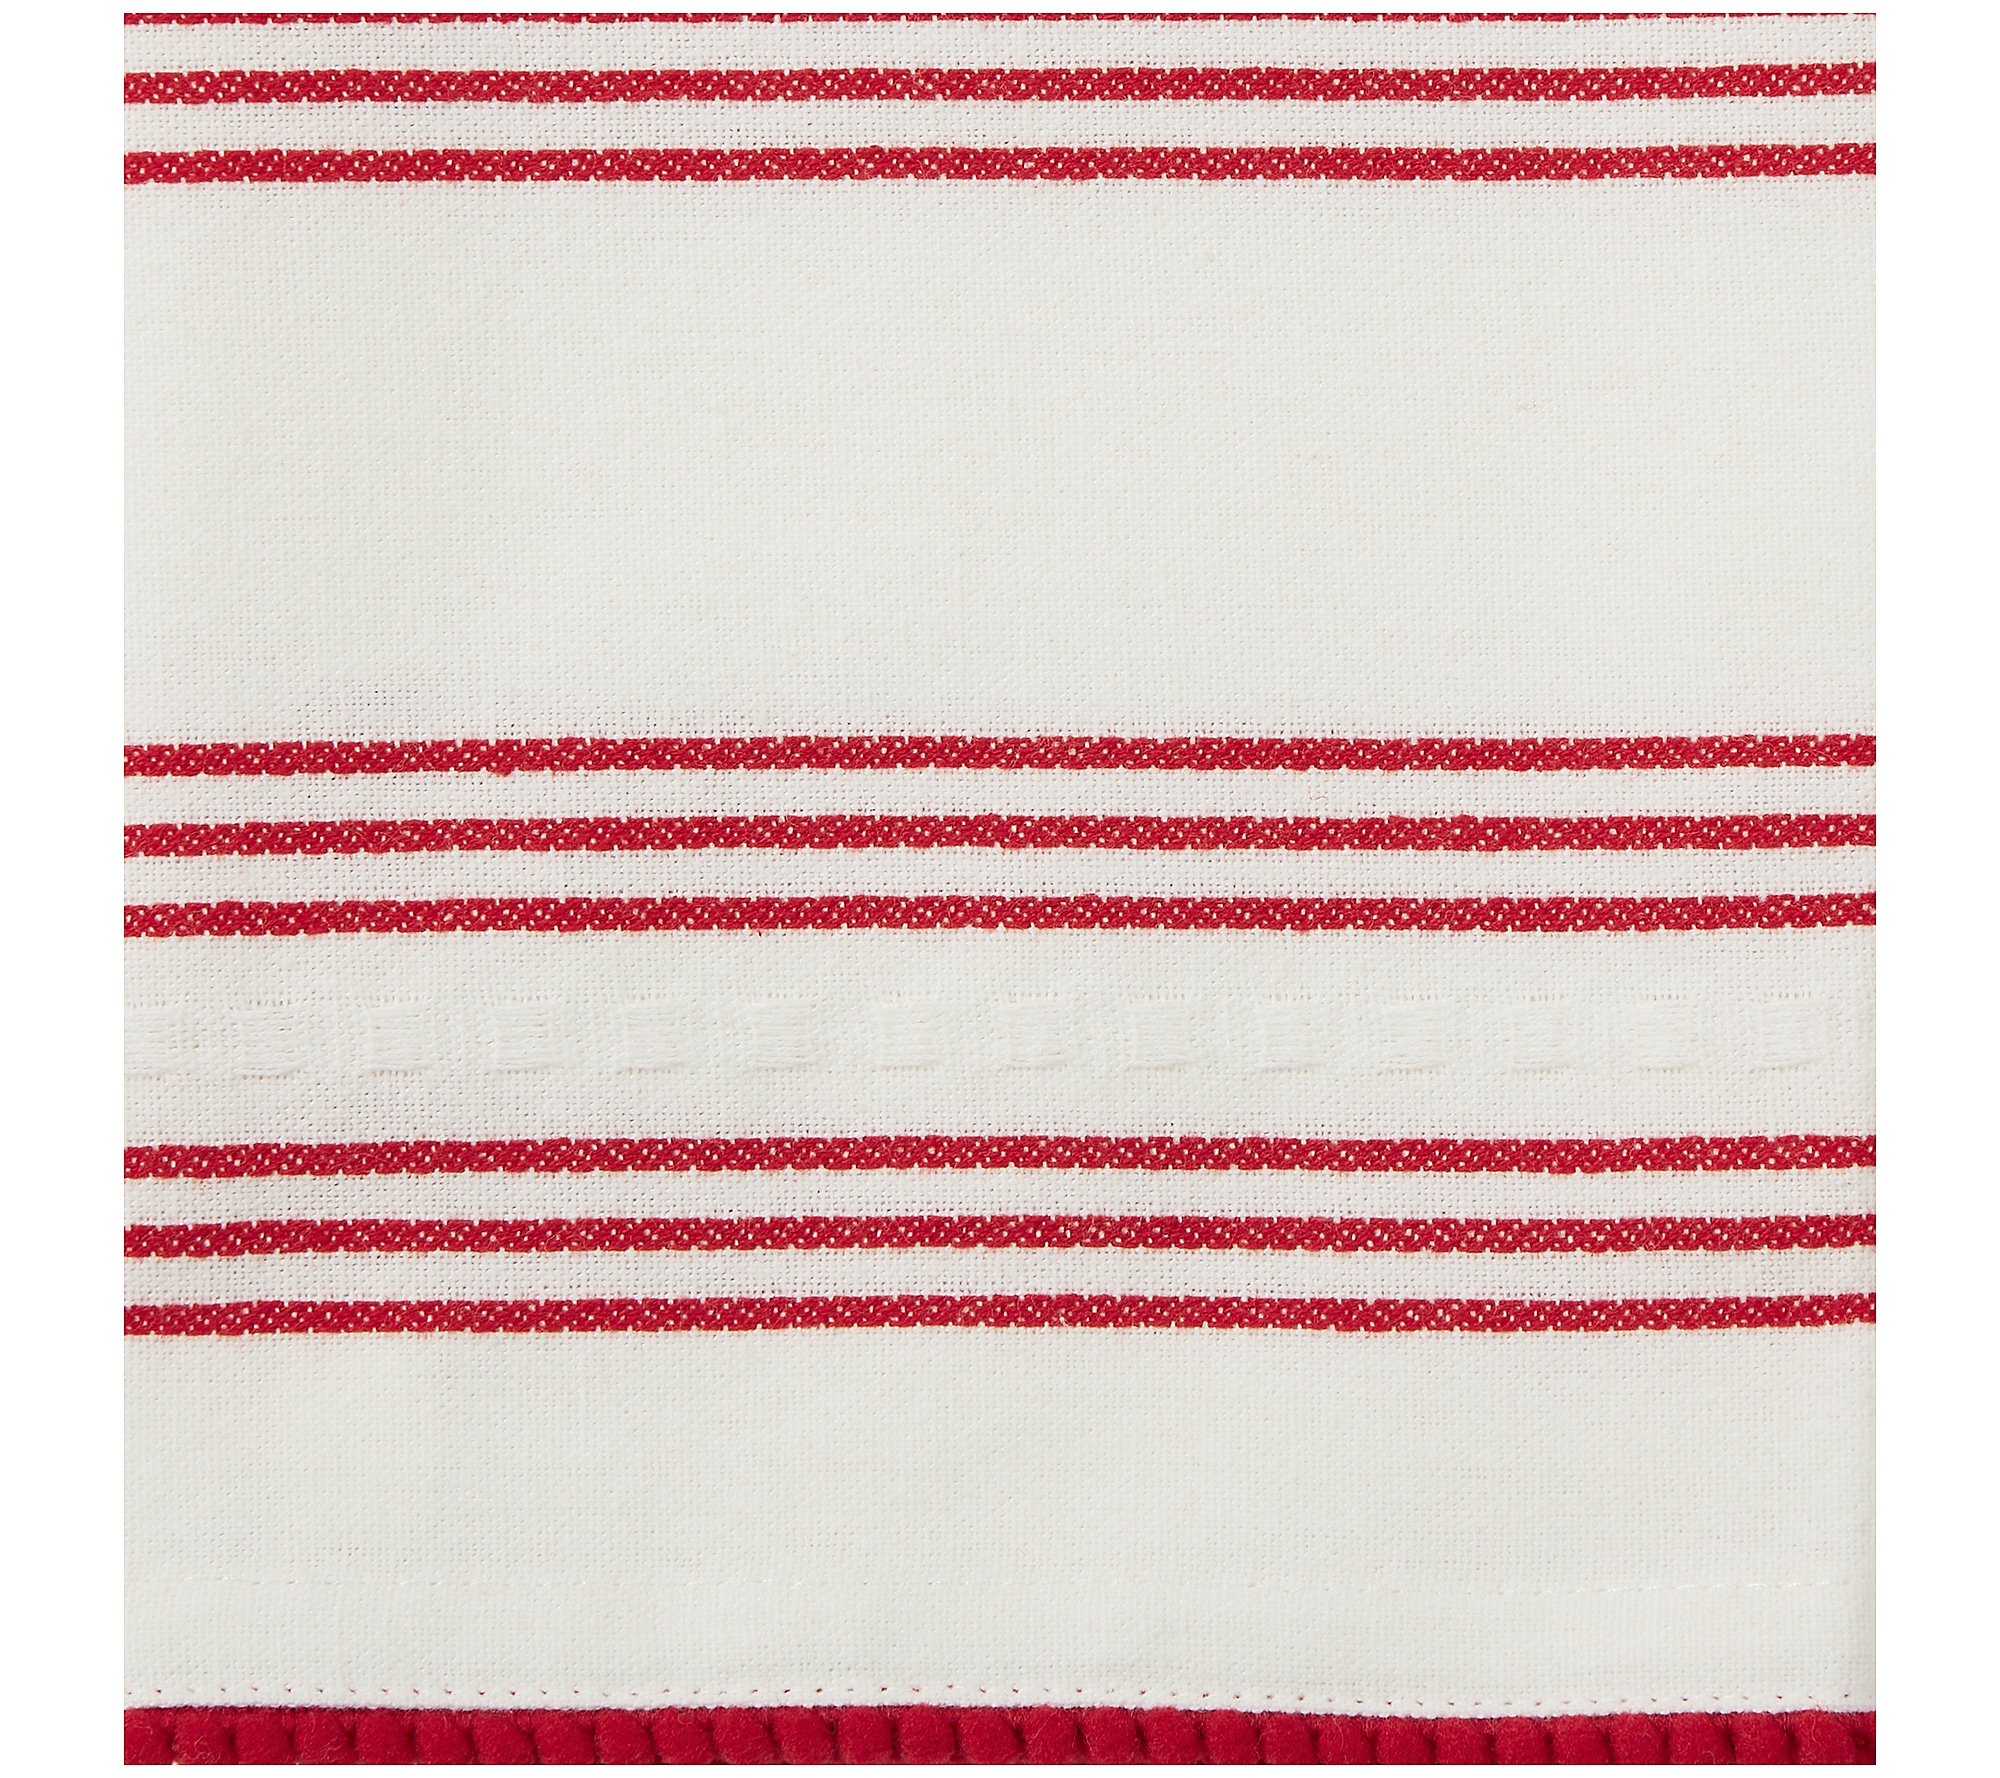 Design Imports Set of 3 Assorted Nordic Tree Ki tchen Towels